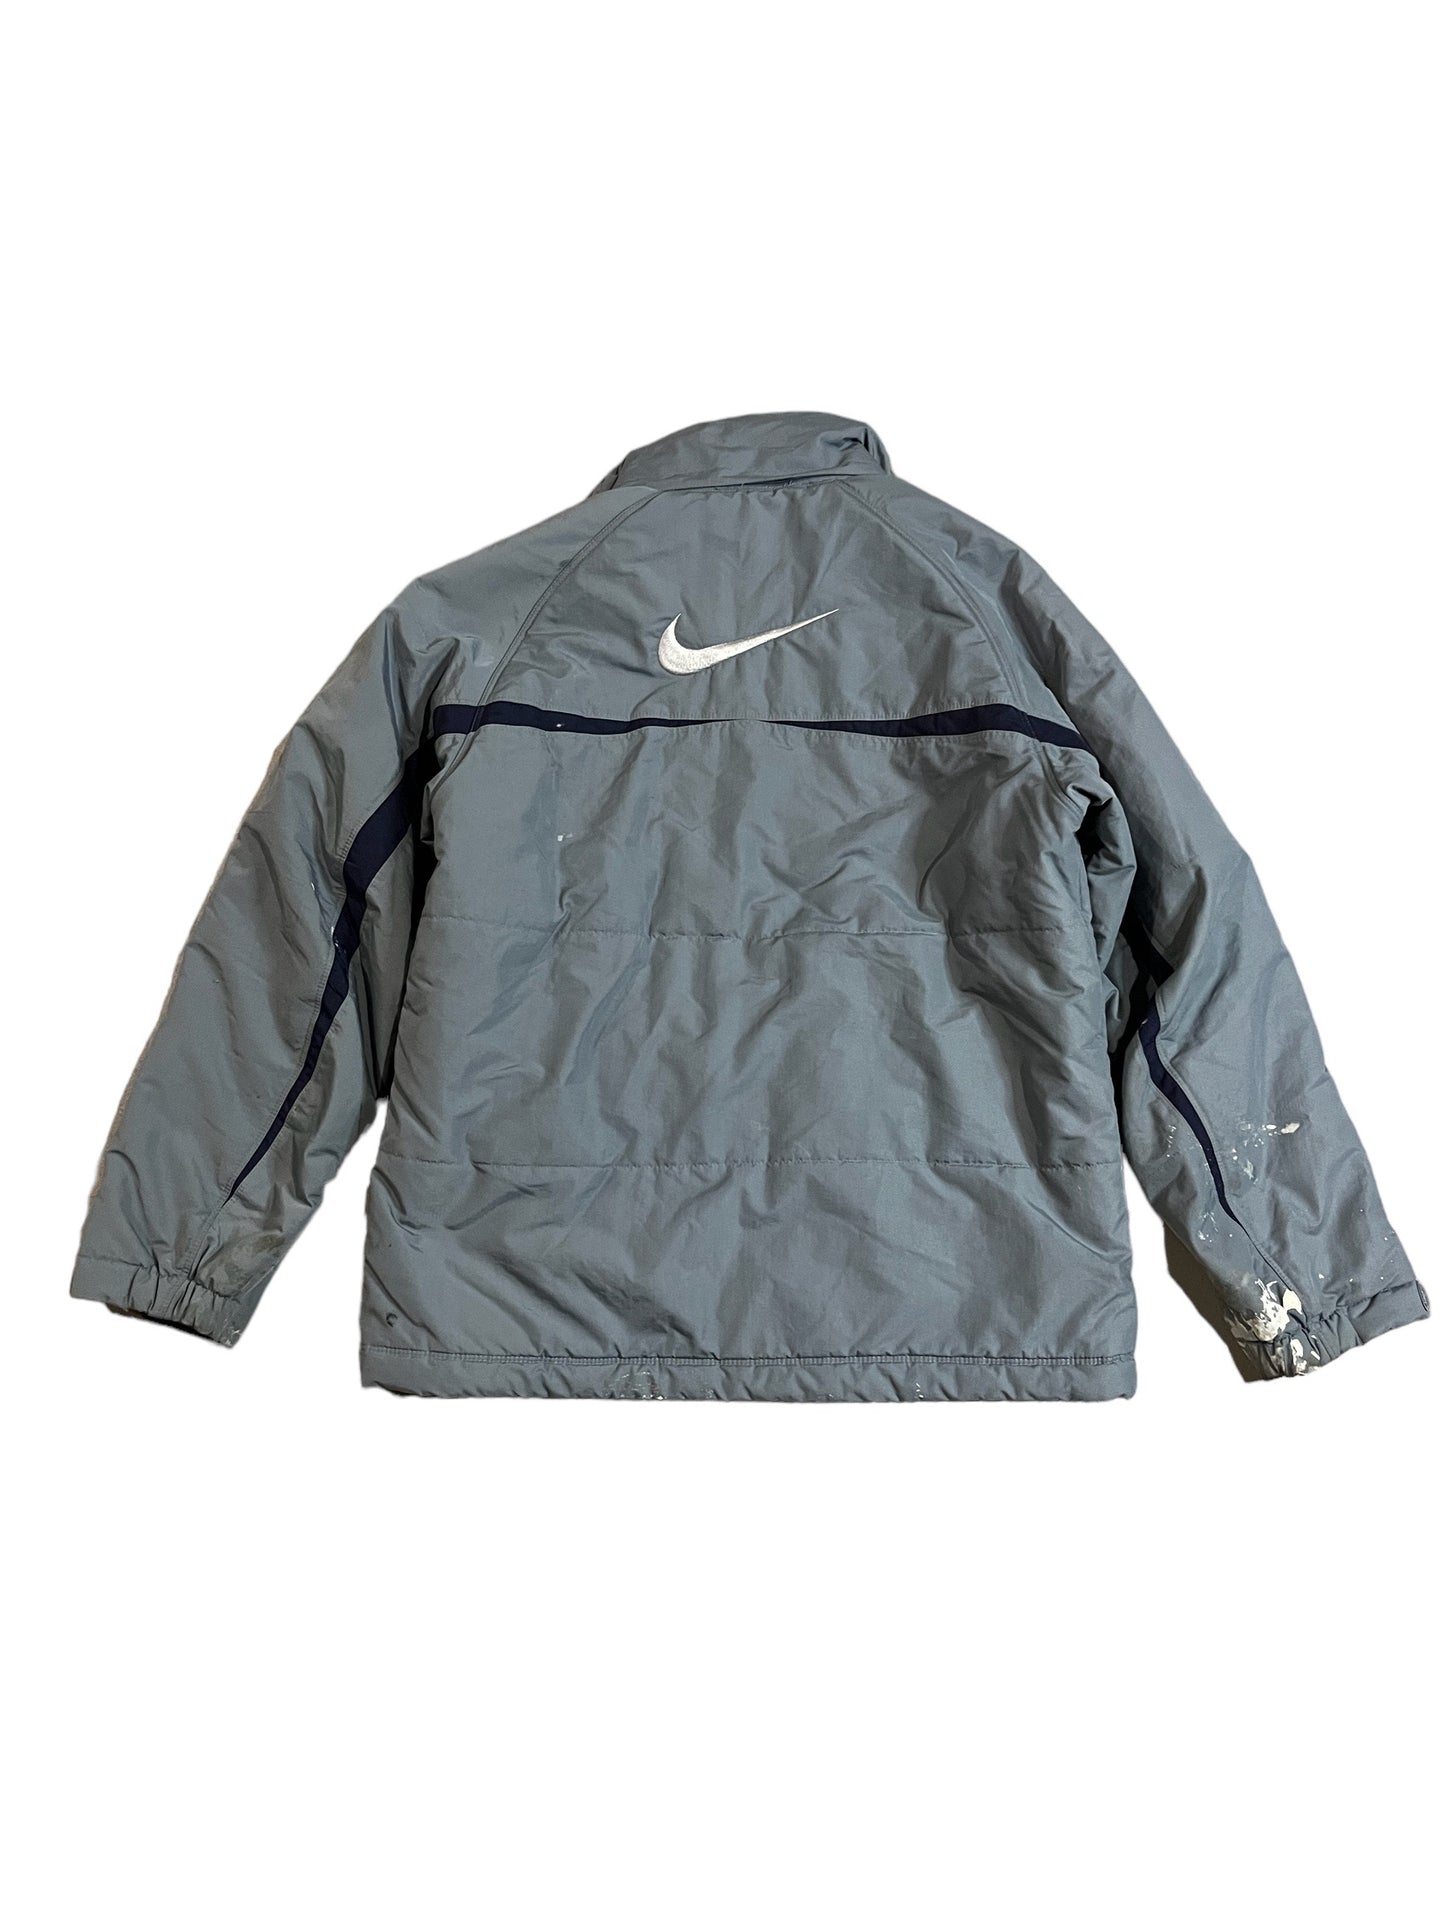 Vintage Nike Jacket Grey